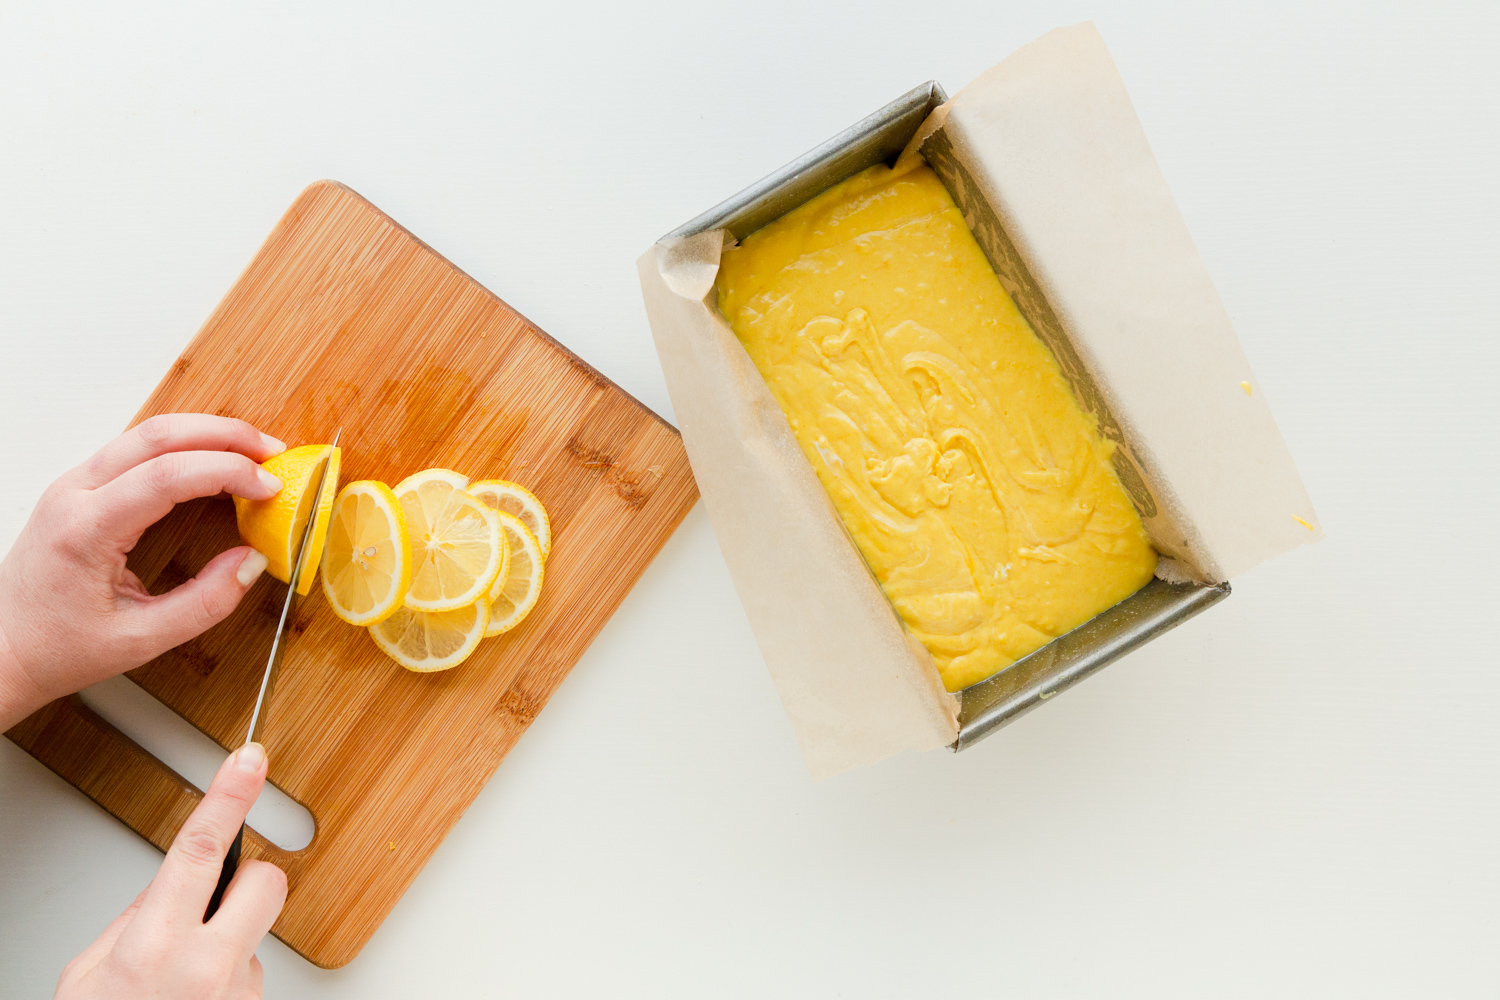 Slicing lemons and baking cake